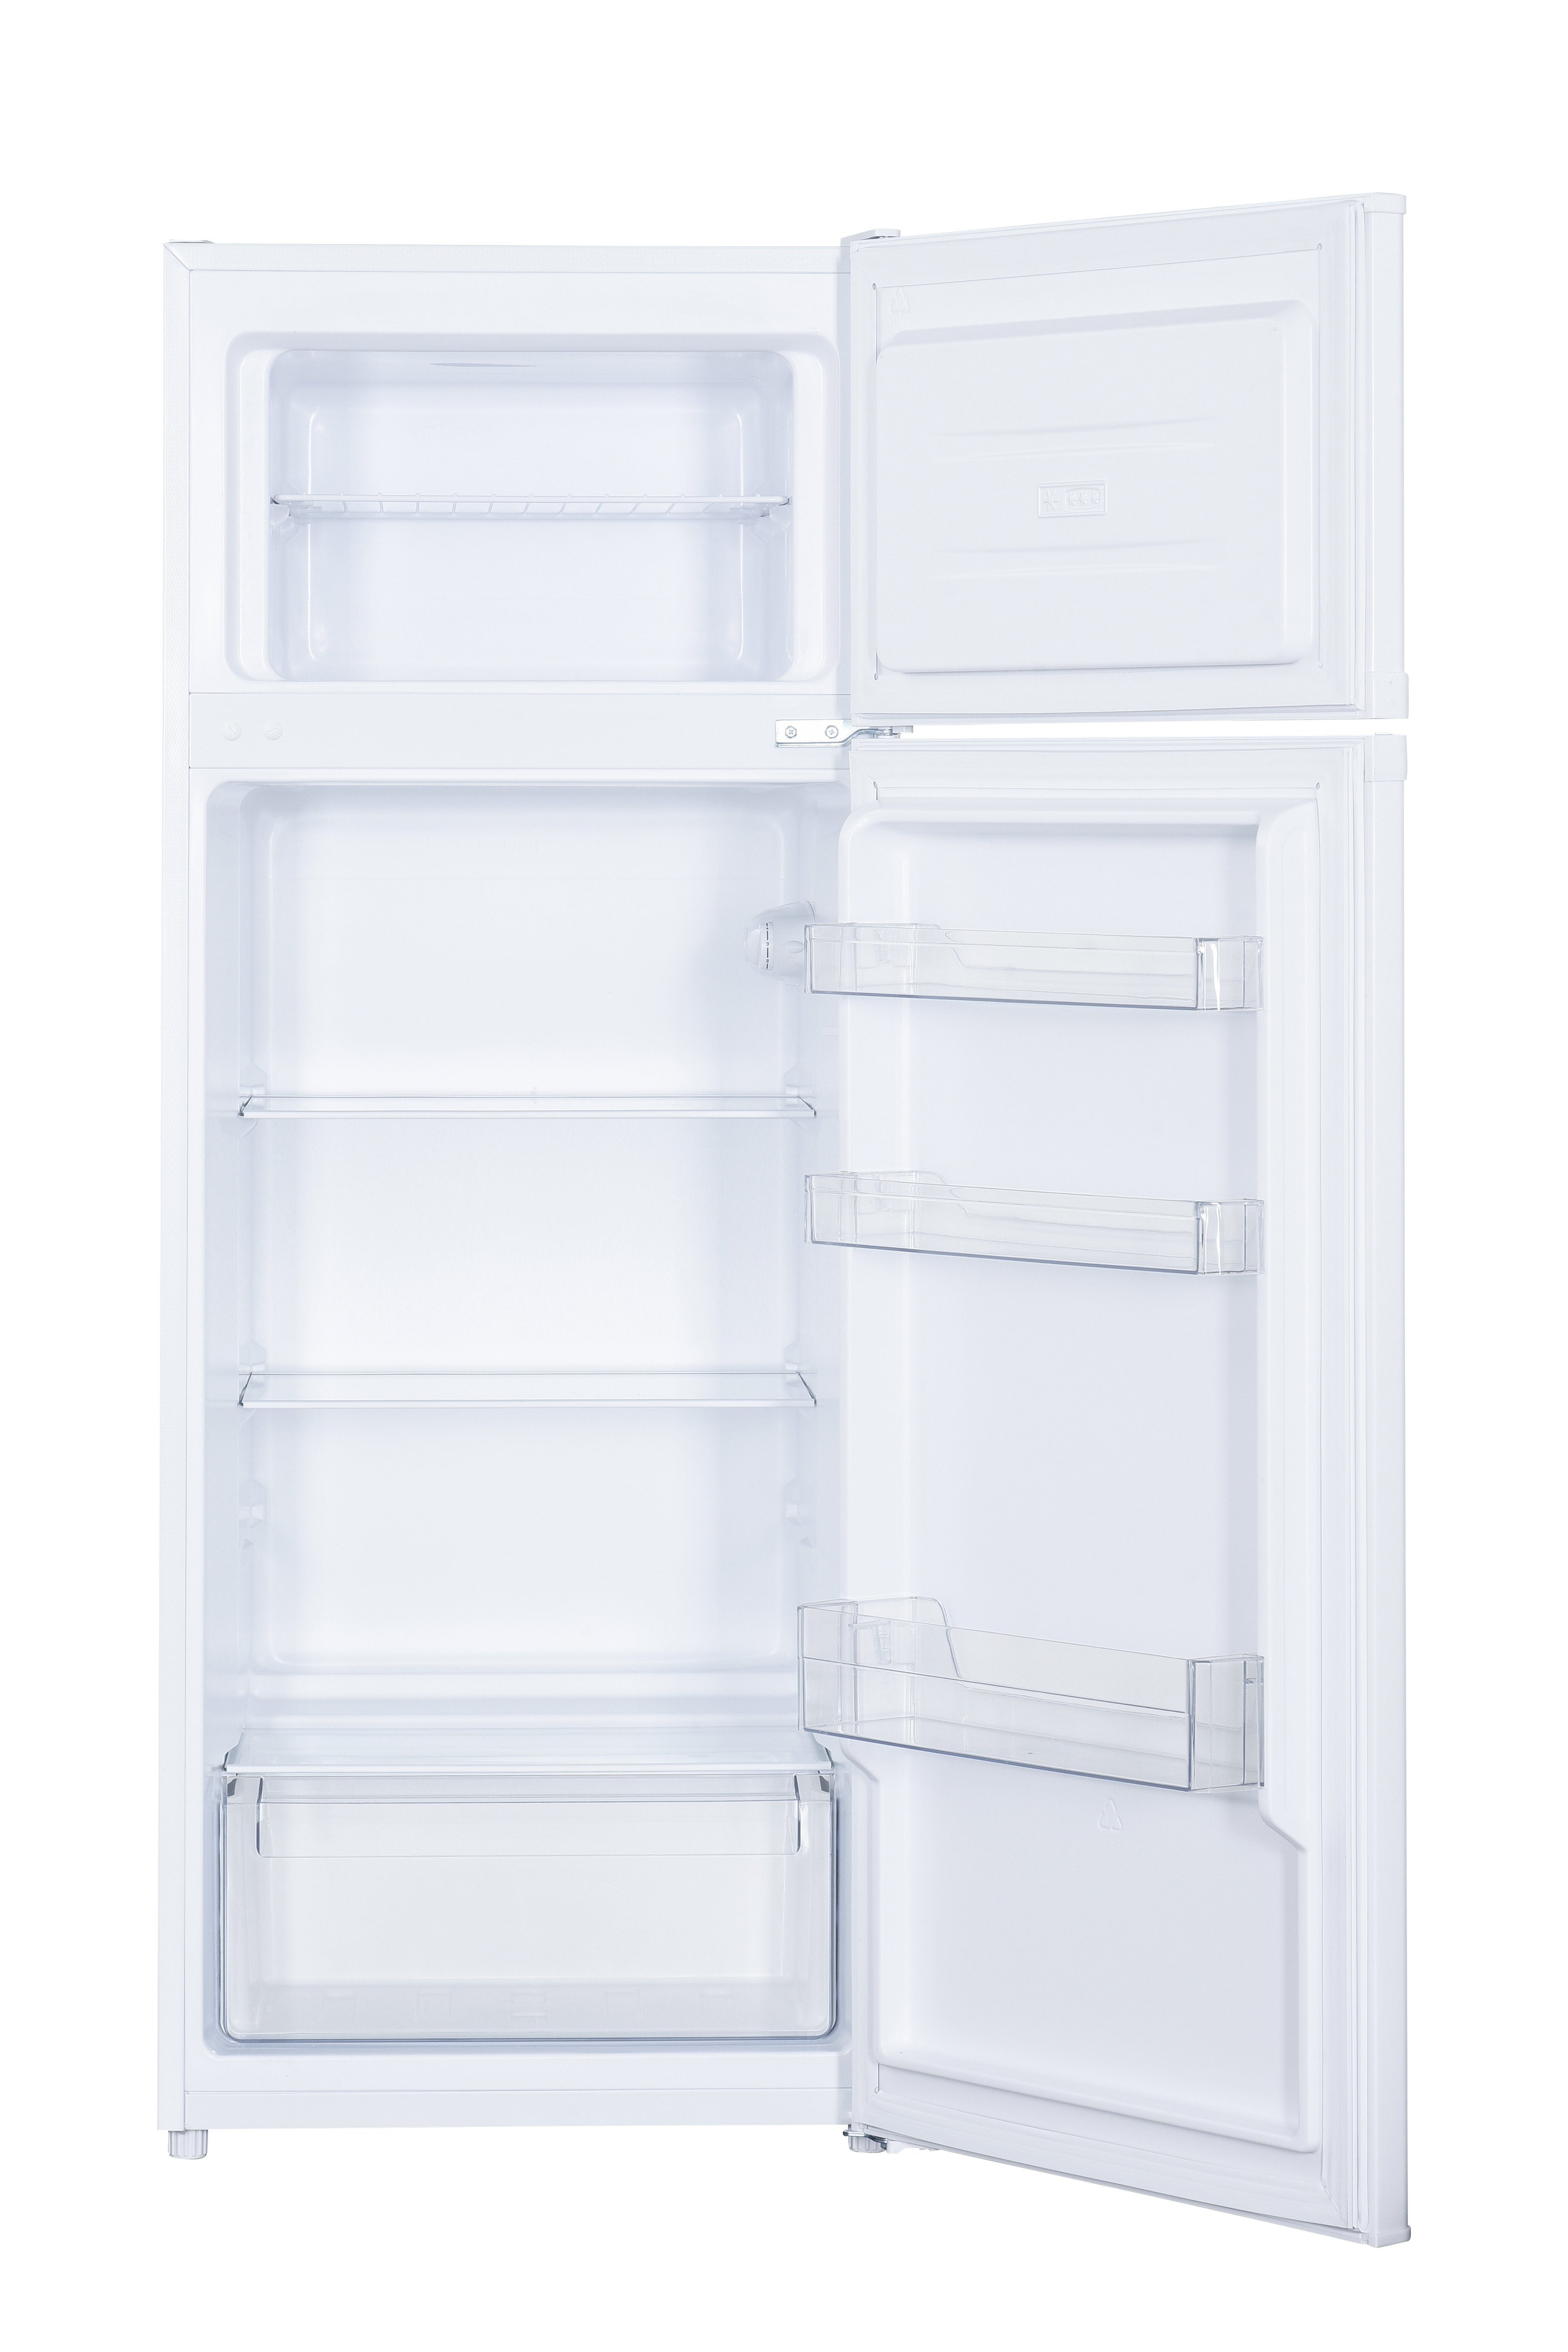 Kühlschrank PKM GK212 W